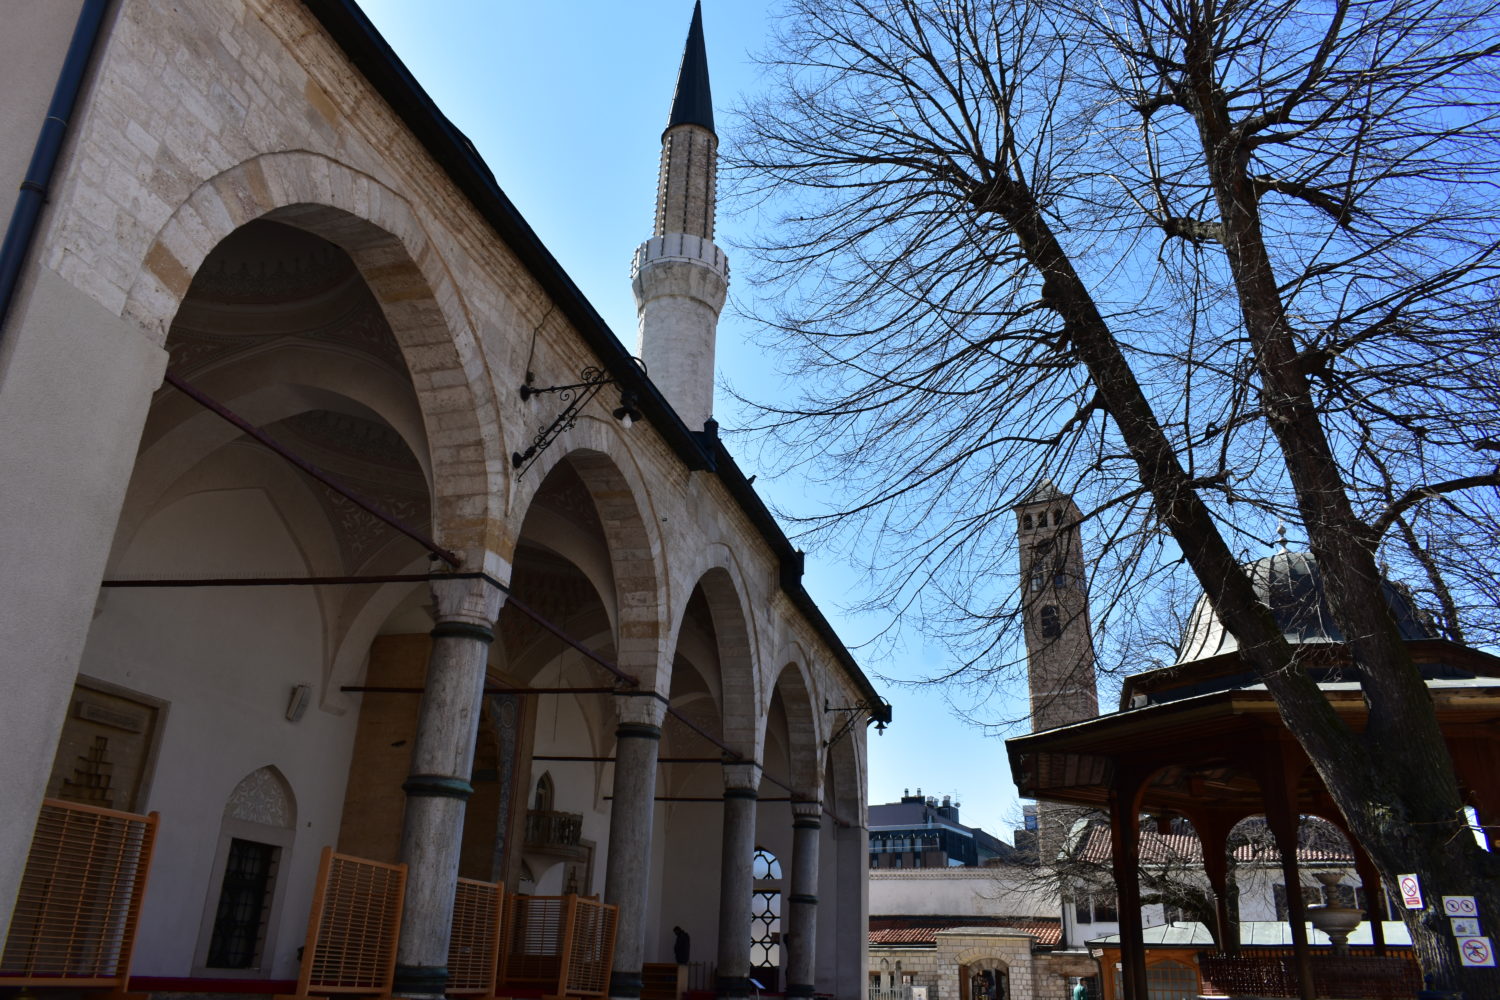 Gazi Husrev-beg Mosque minaret and clock tower in Sarajevo during a Sarajevo Insider tour